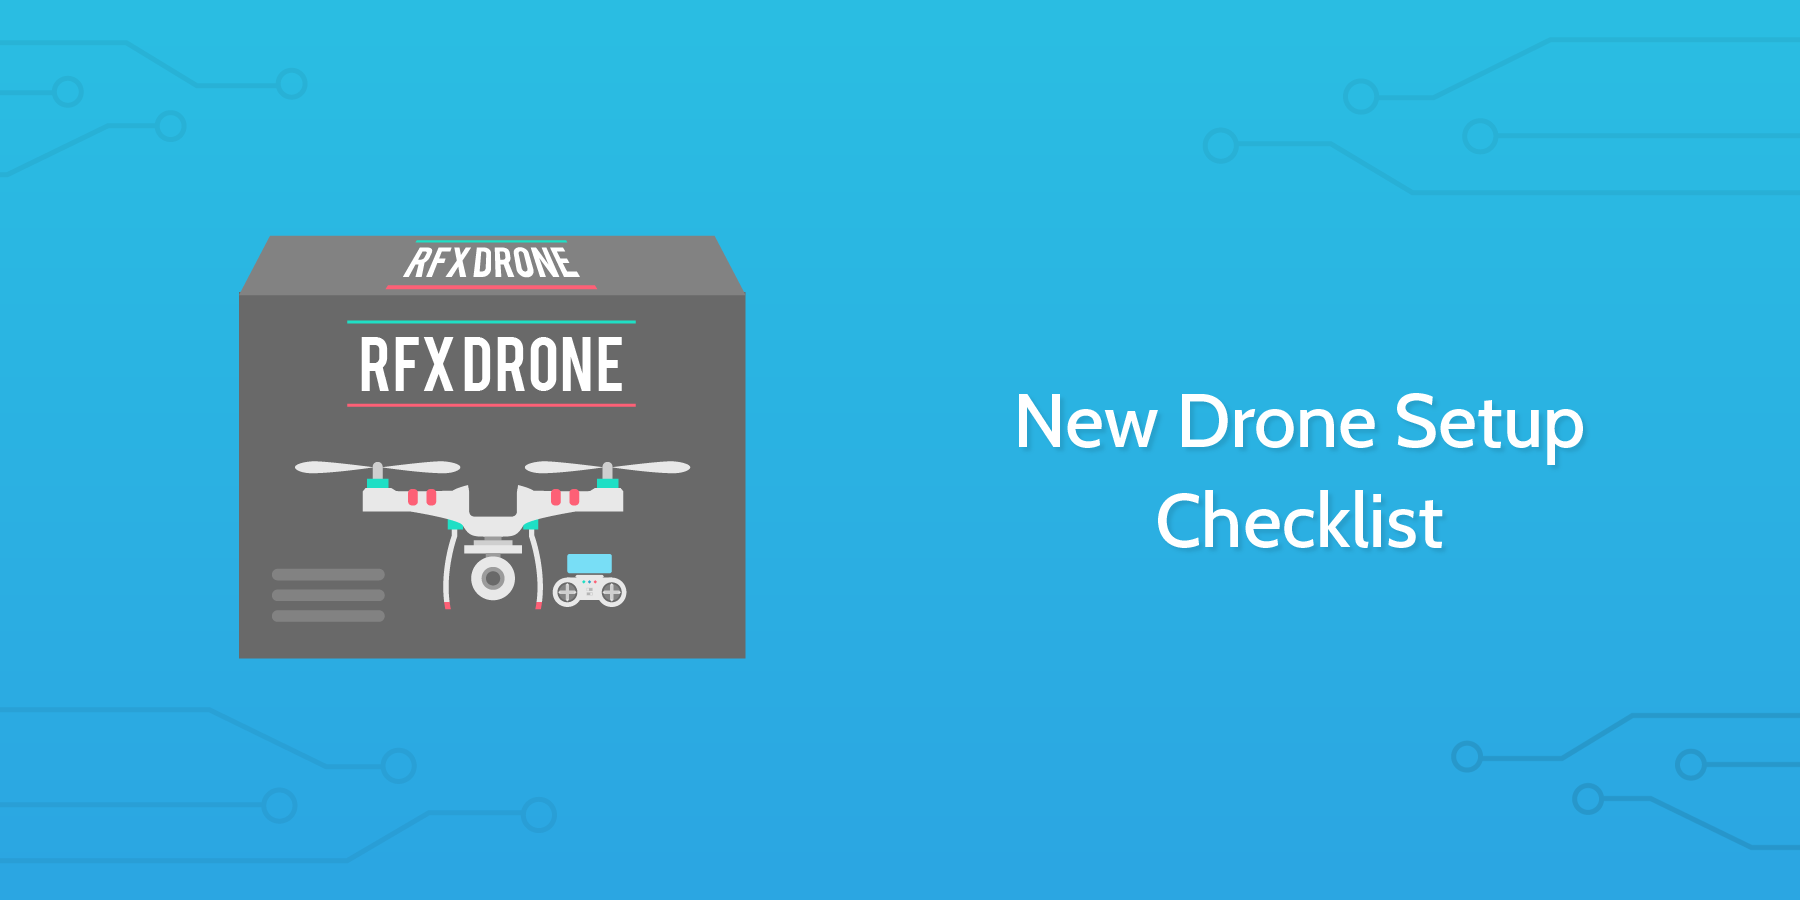 New Drone Setup Checklist